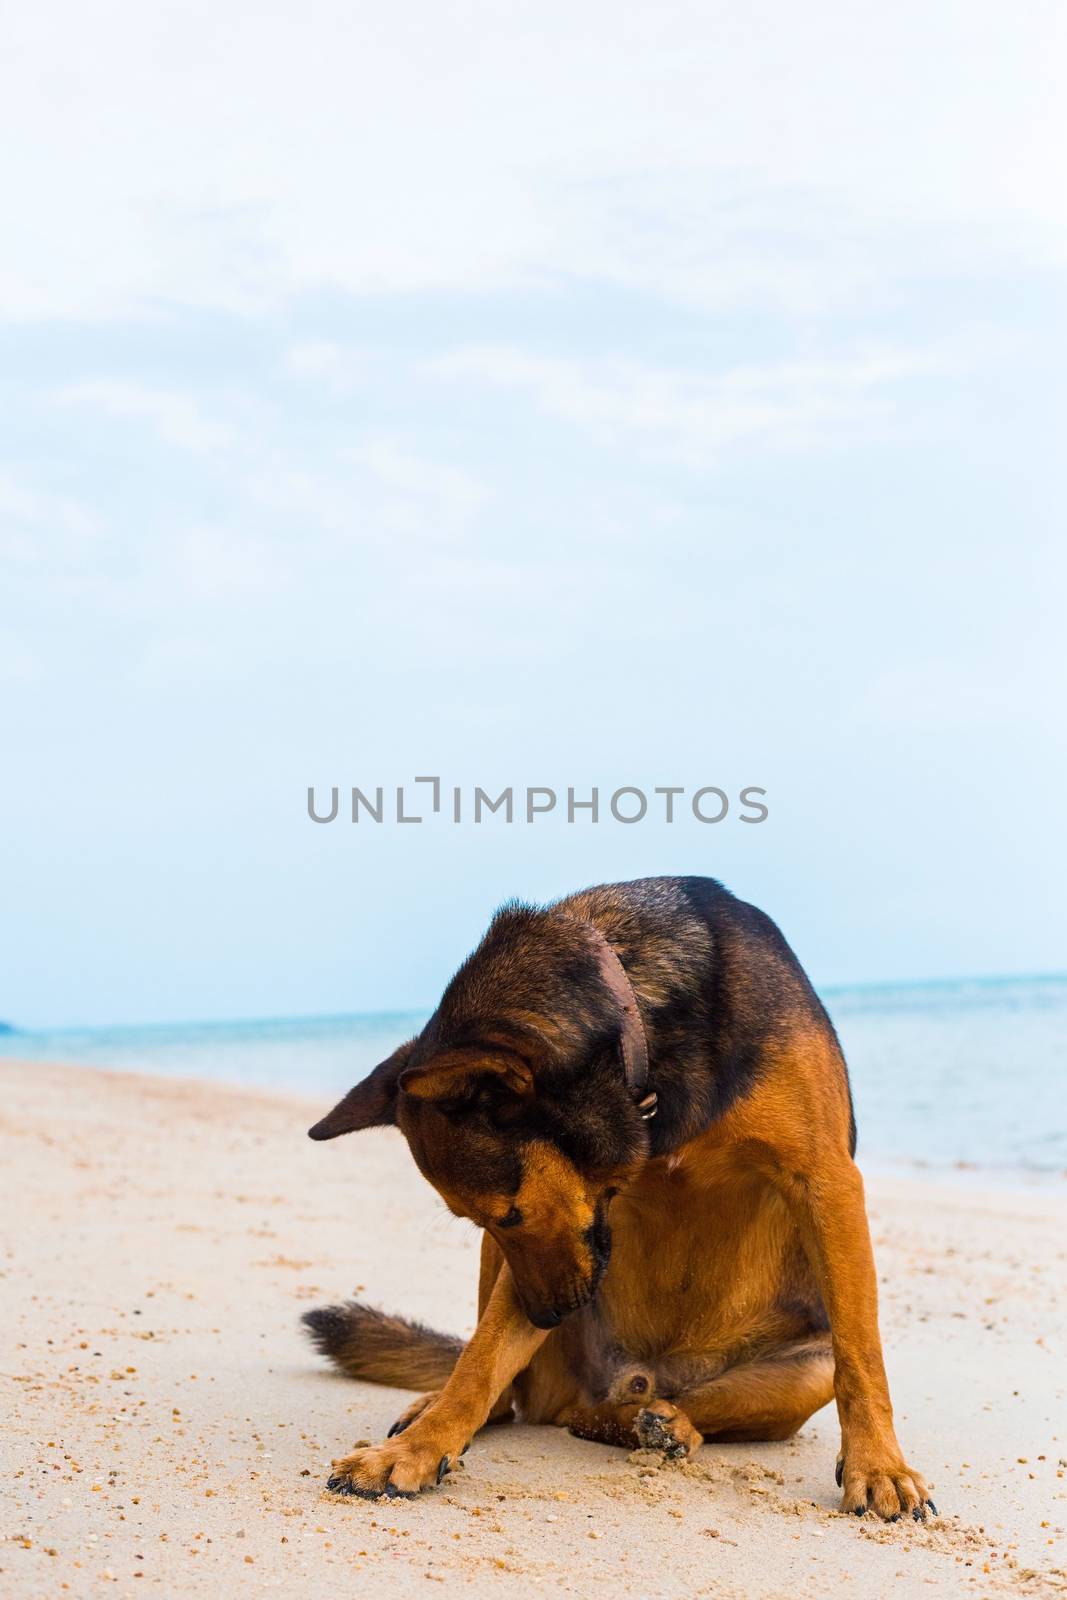 A dog  sitting on the beach. Sad concept by Bowonpat